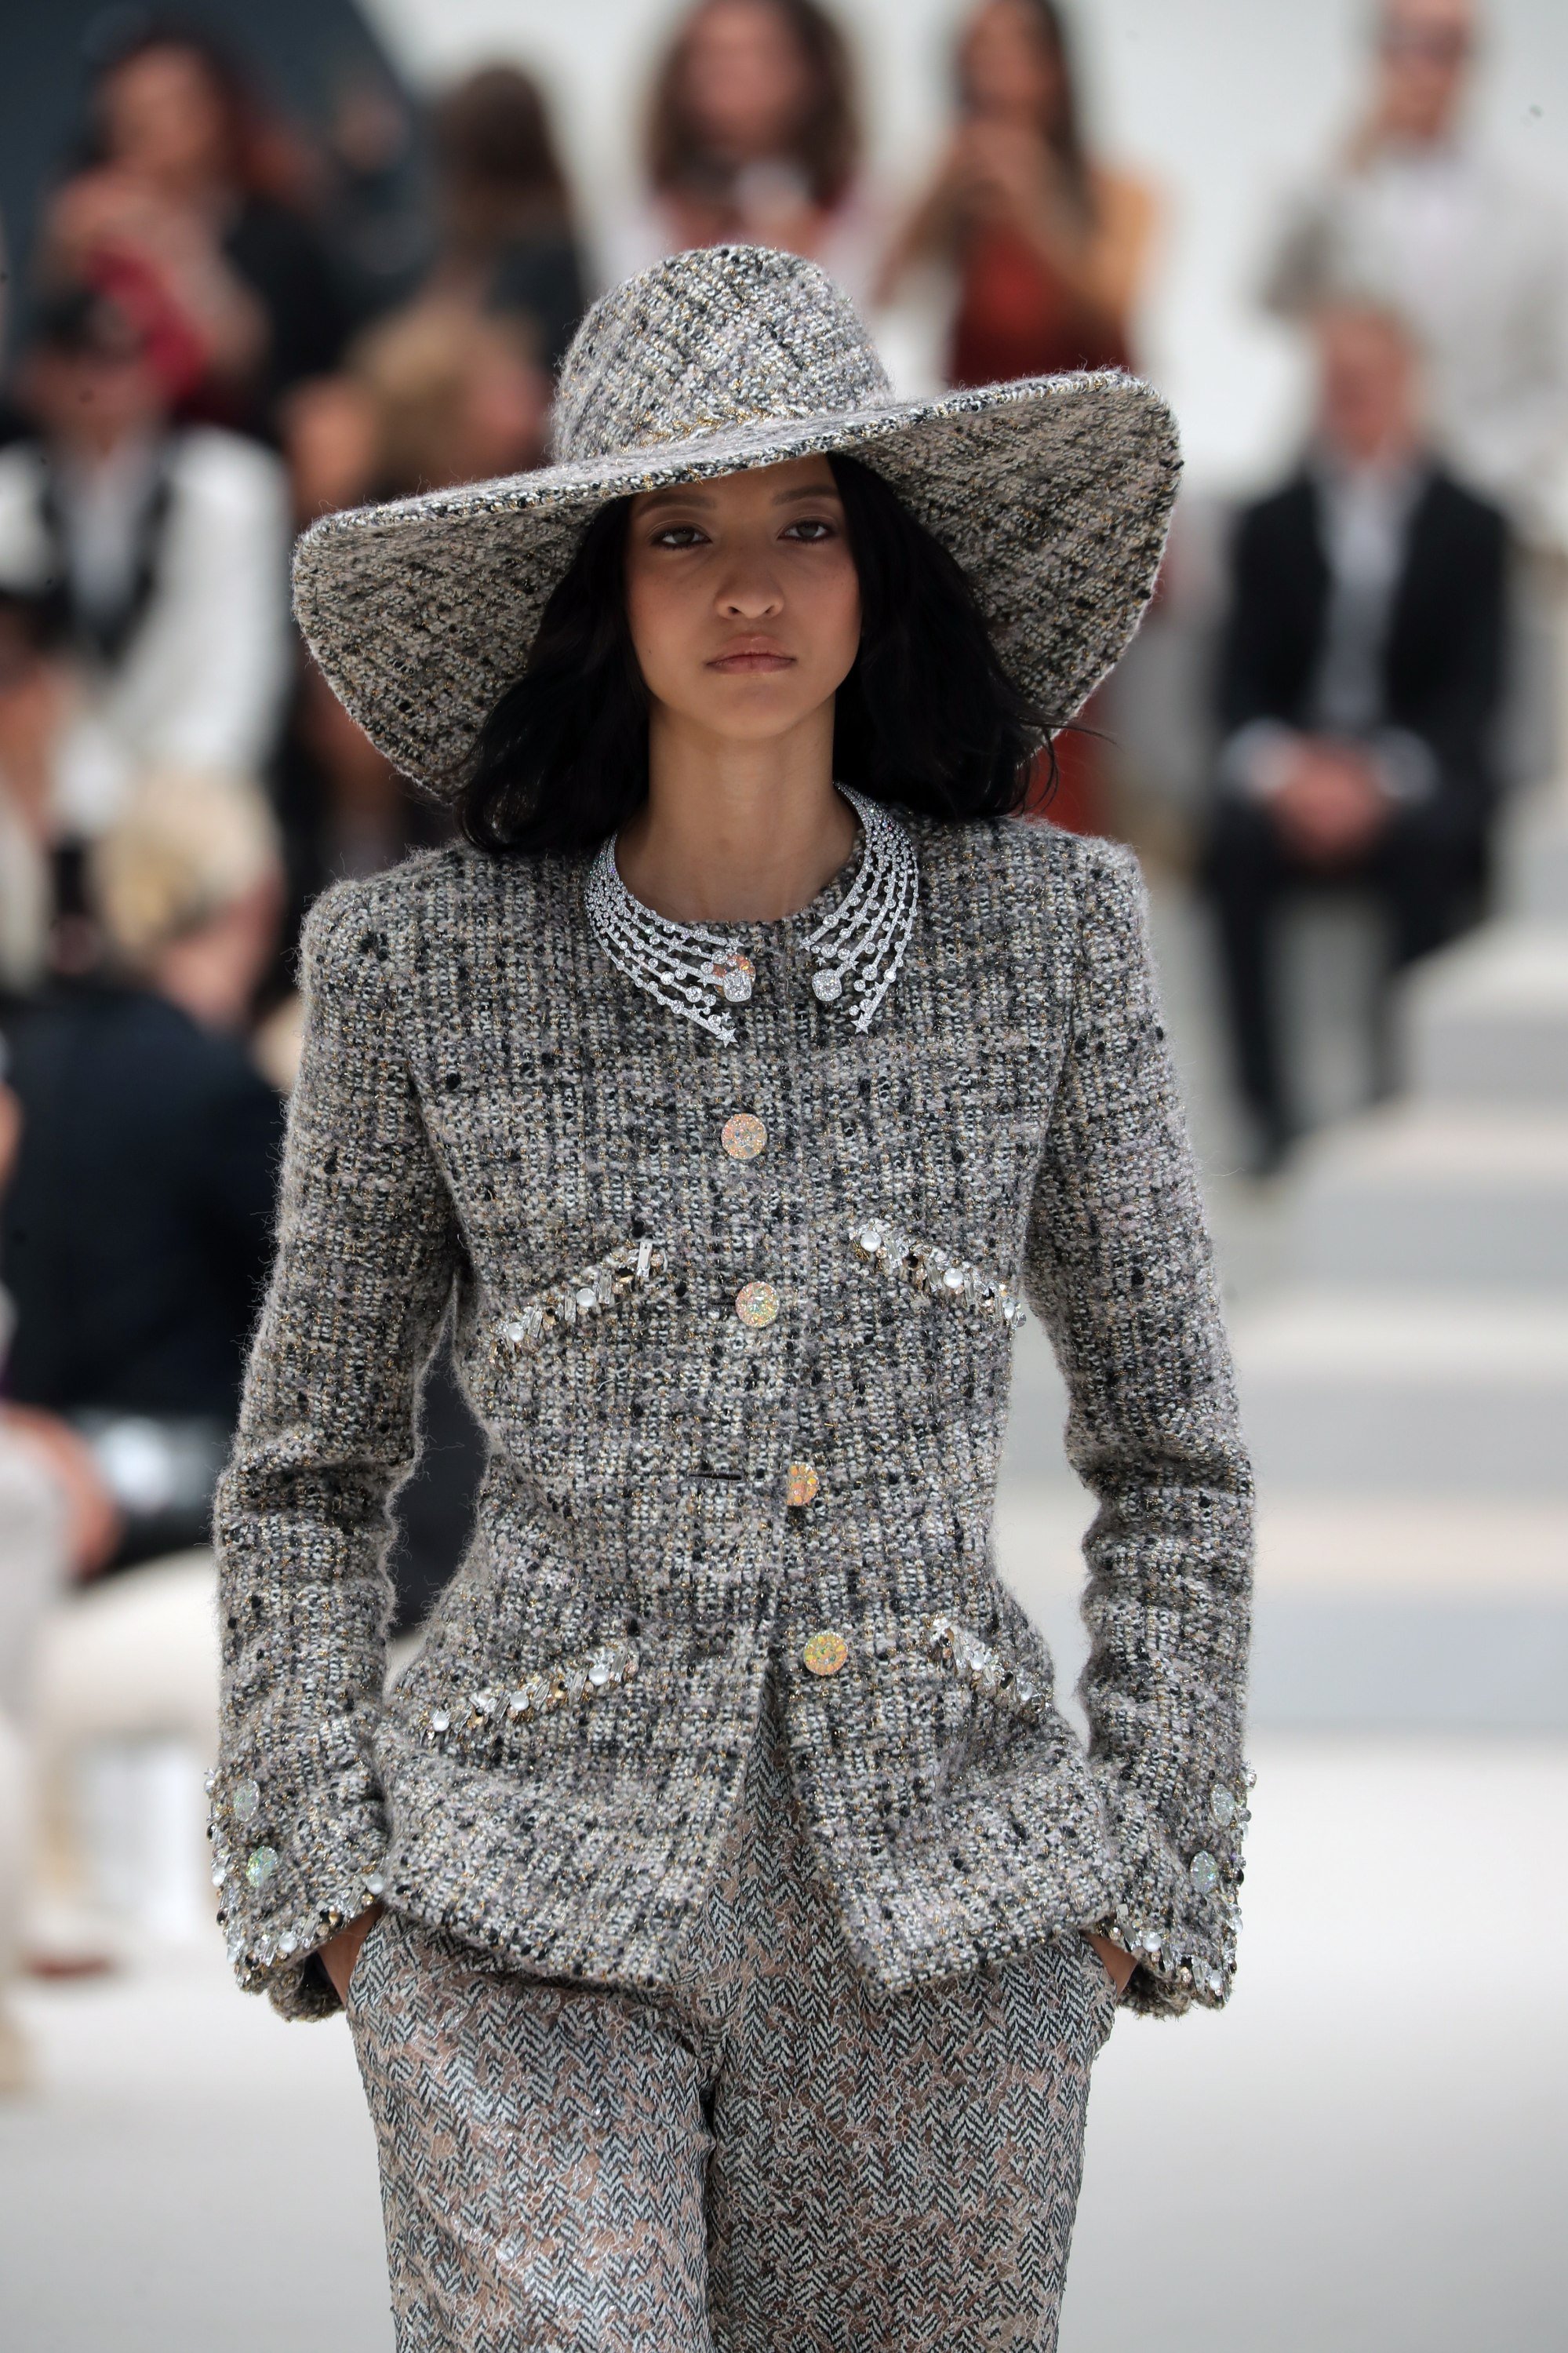 Louis Vuitton, Chanel Rise as Prada Falls in Luxury Brand Survey - Bloomberg